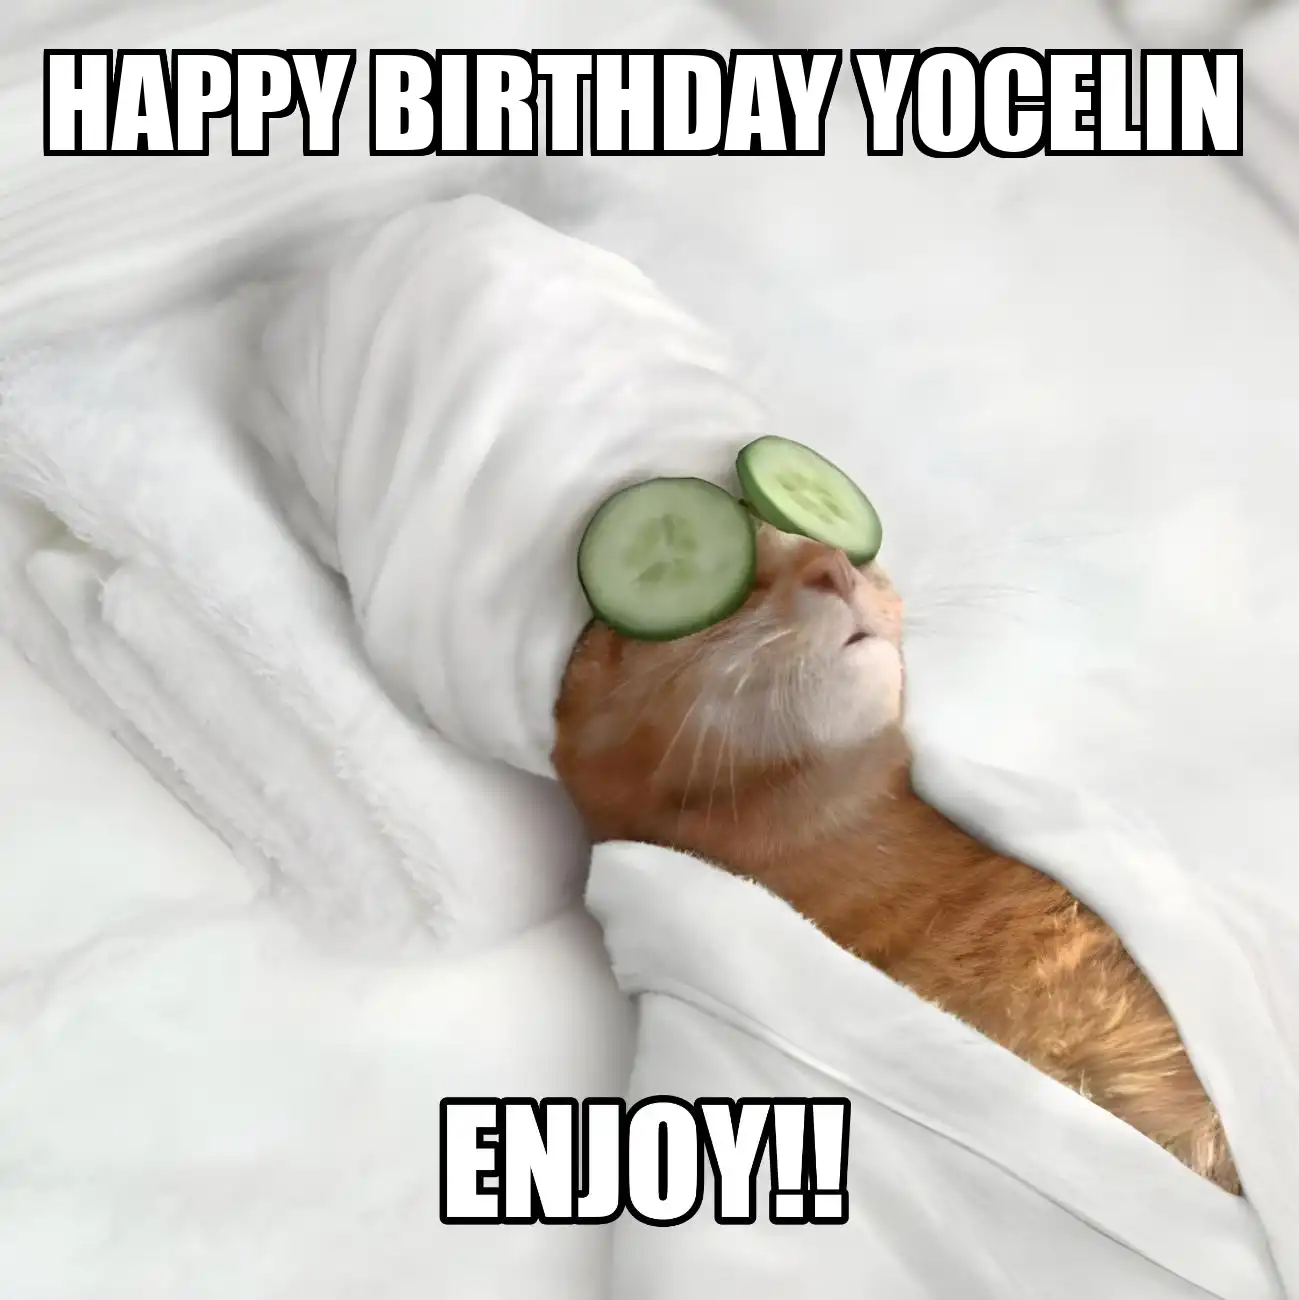 Happy Birthday Yocelin Enjoy Cat Meme